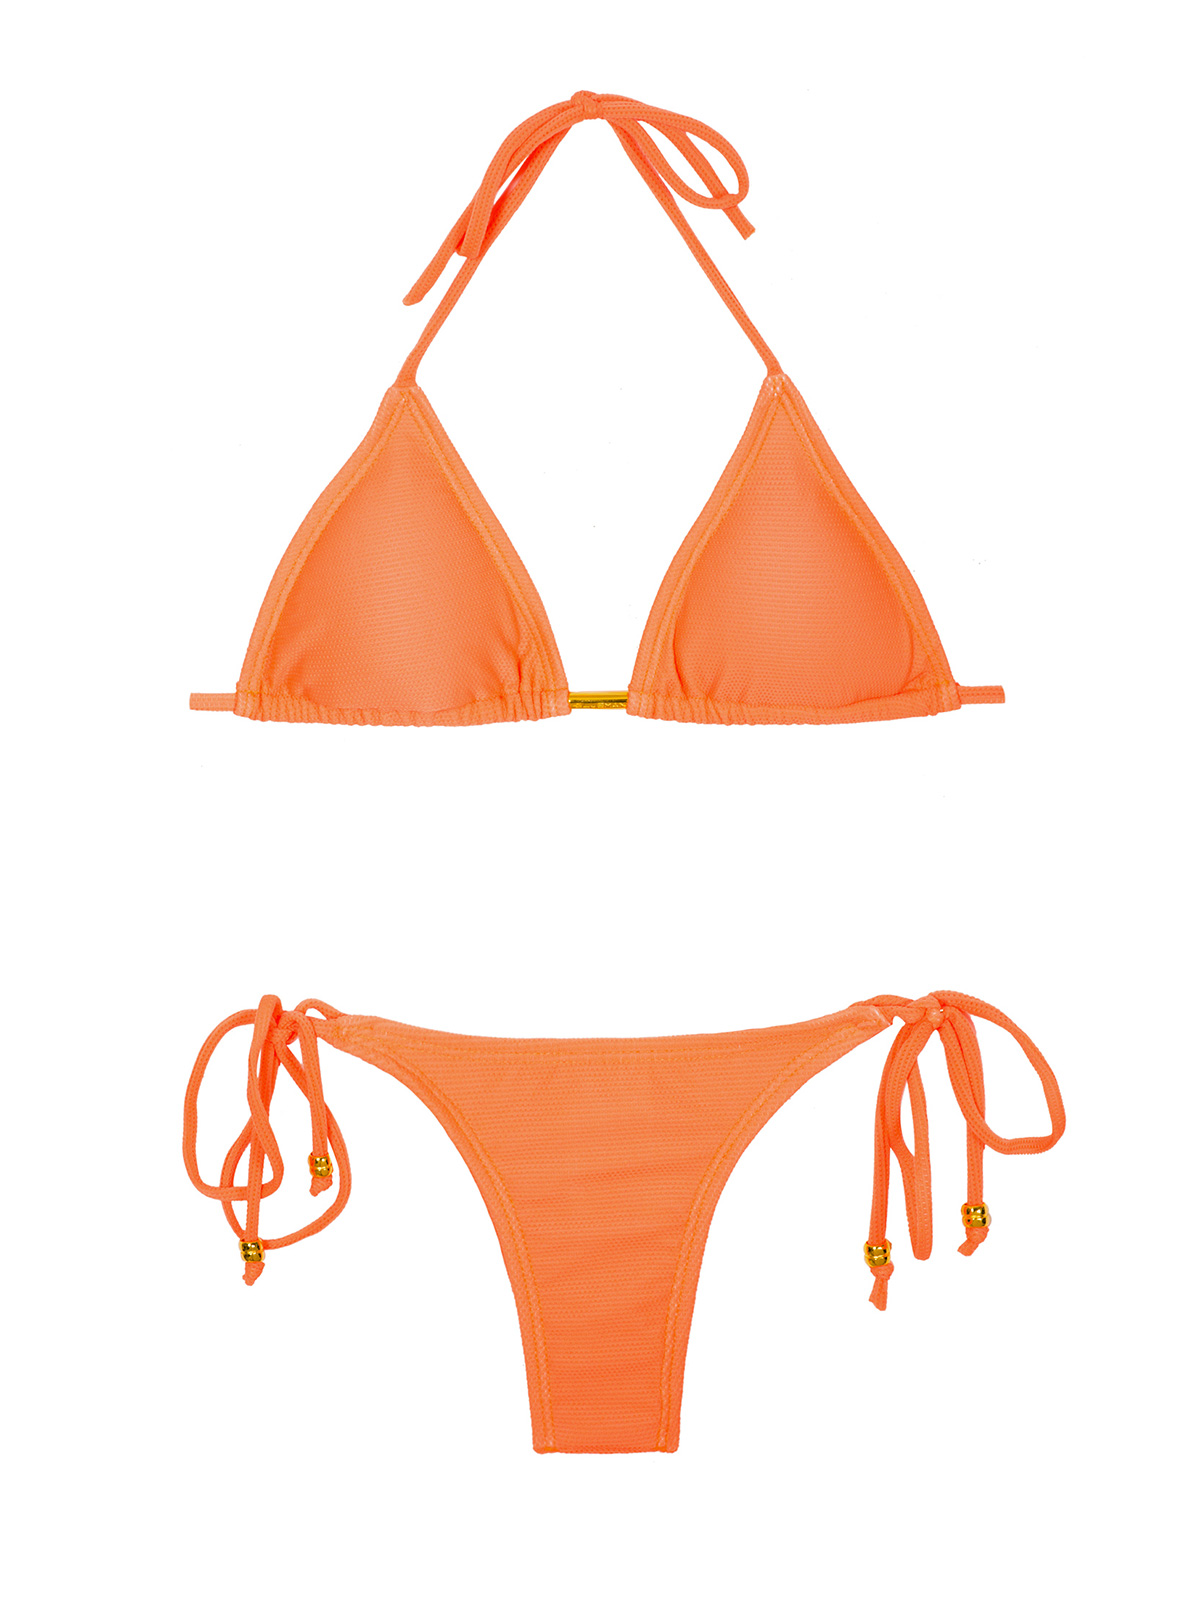 Textured Fluorescent Orange Triangle Bikini, Tie Bottom - Papaya Textura